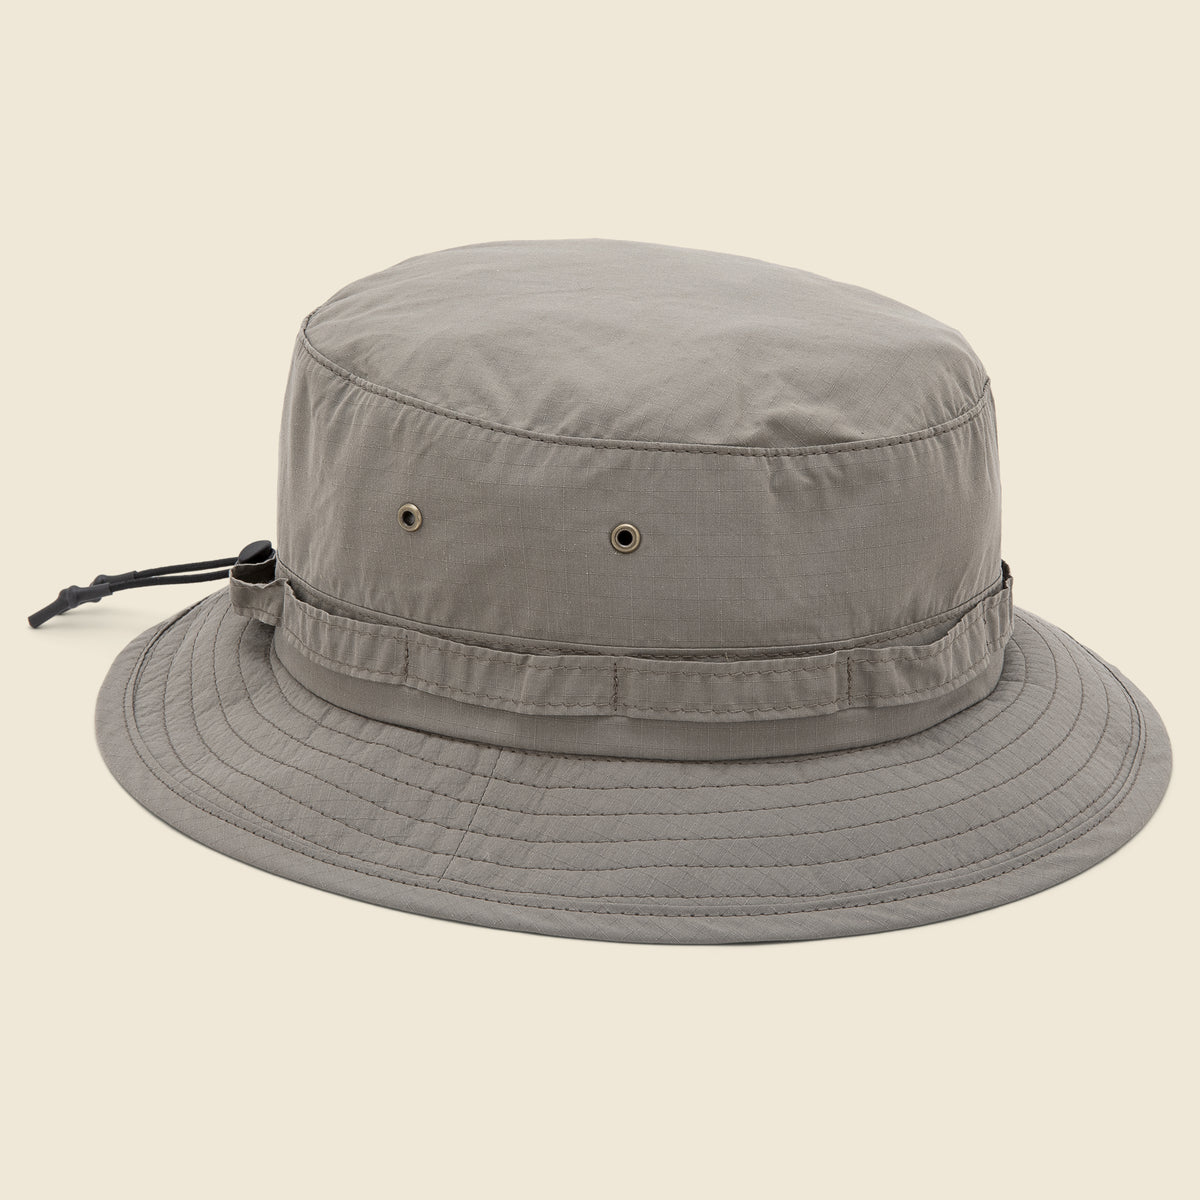 OVY - Rip Stop Nylon Bucket Hat スーパーセール - 帽子